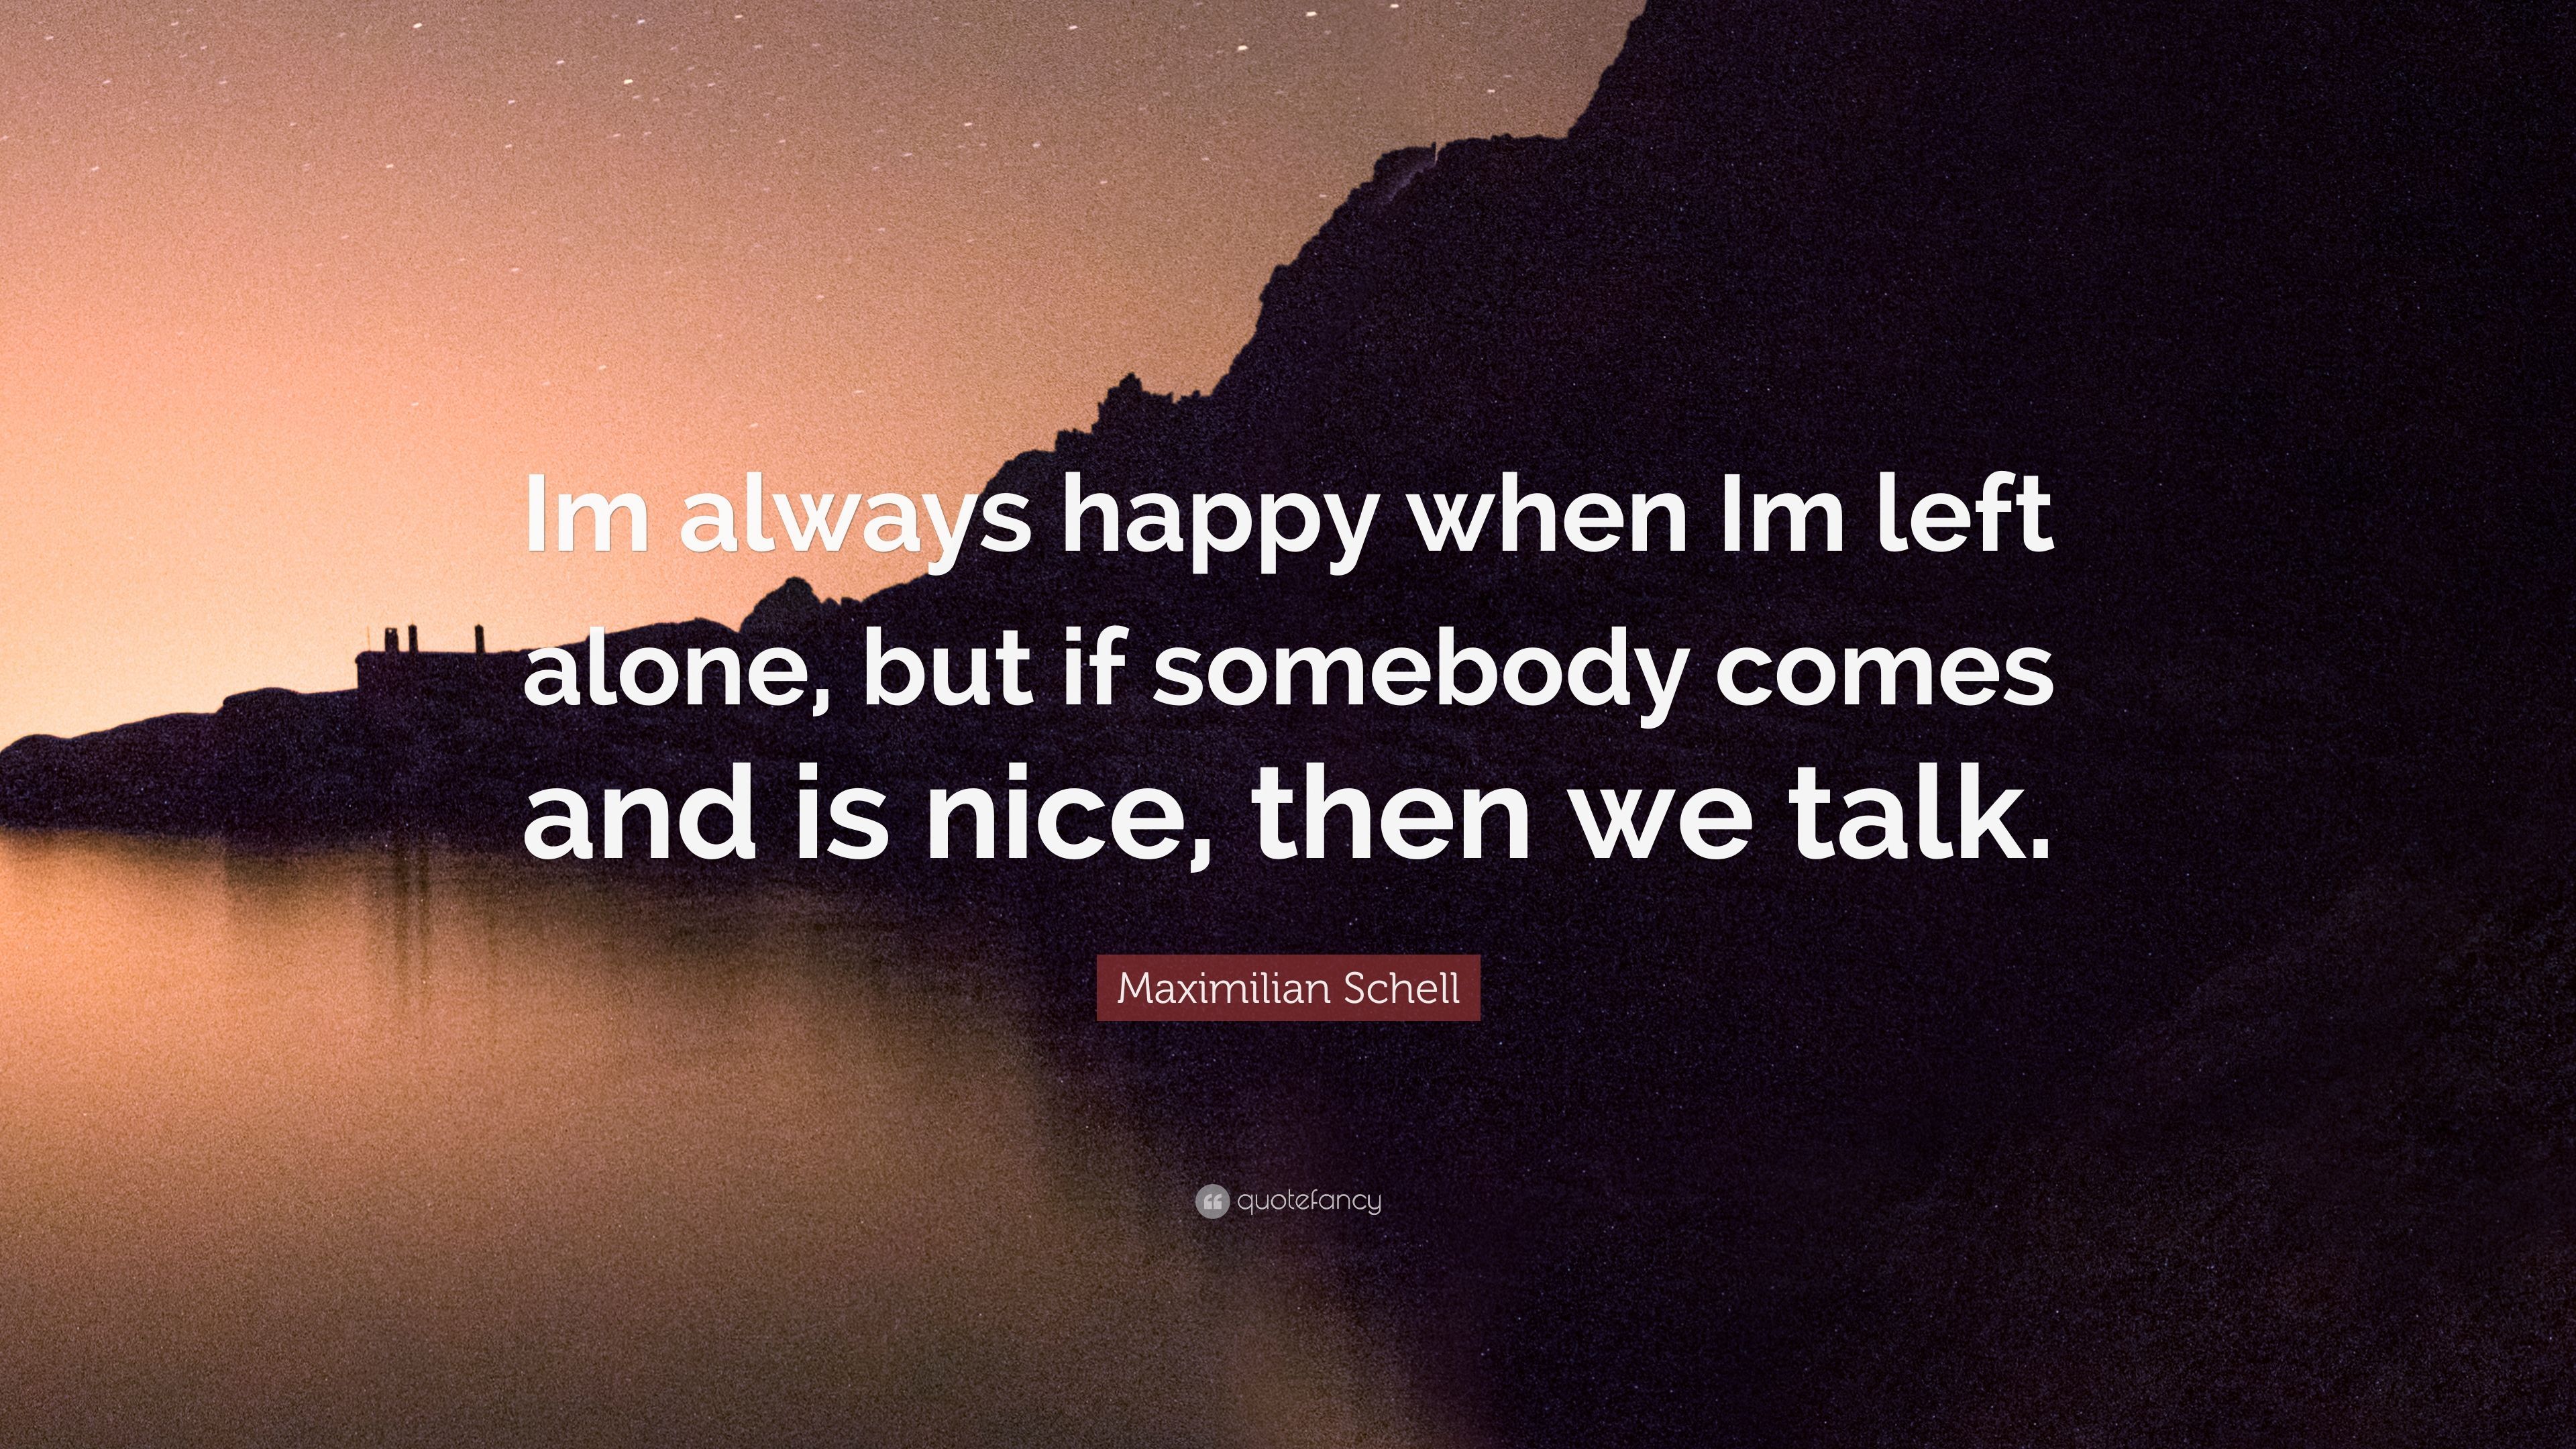 Maximilian Schell Quote: “Im always happy when Im left alone, but if